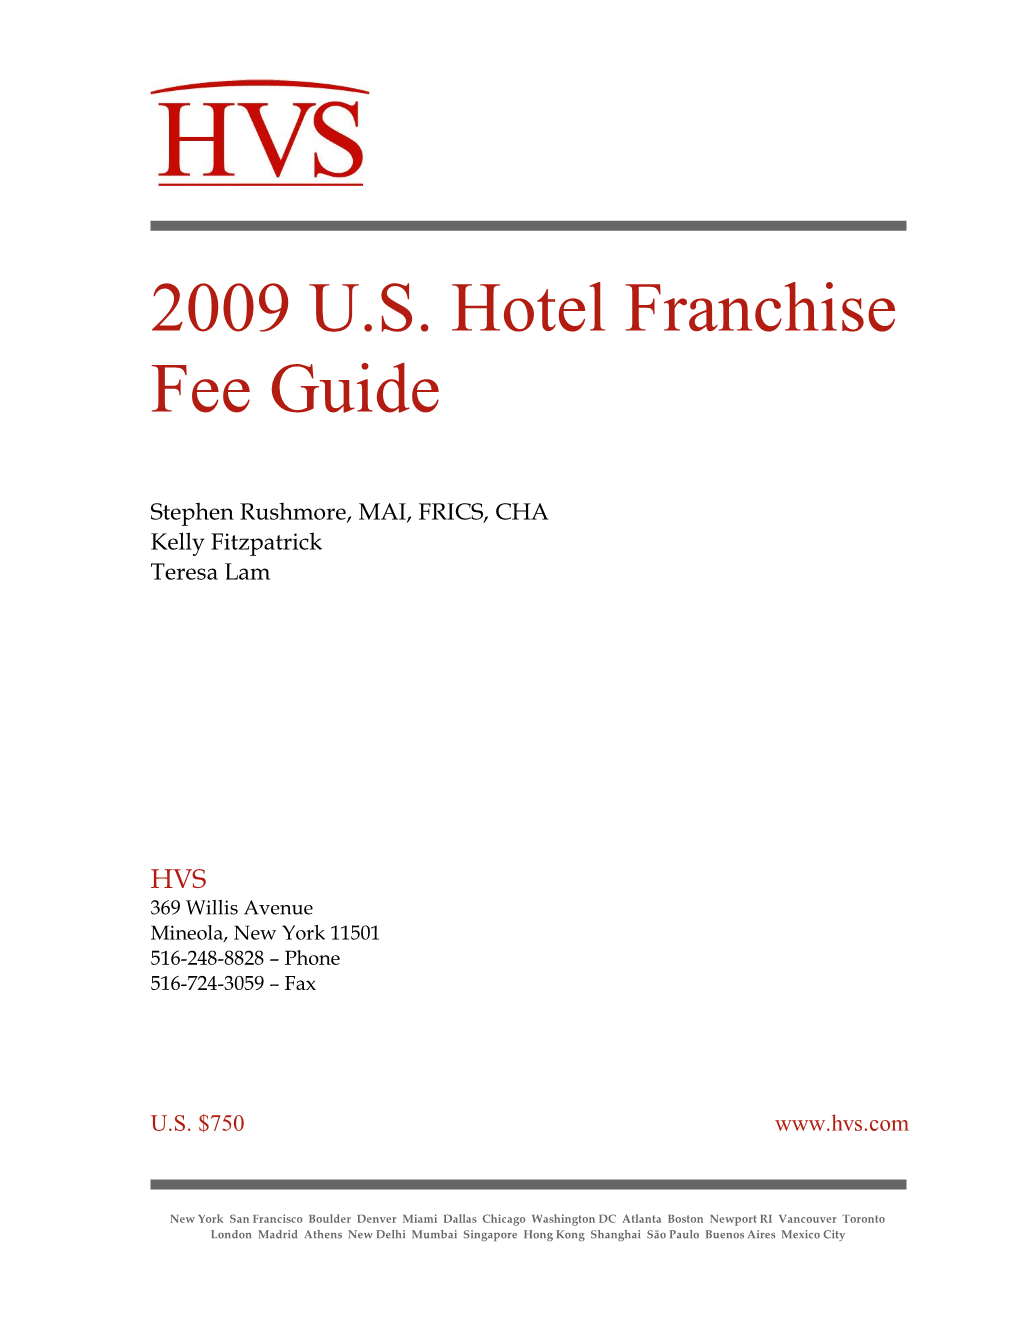 2009 U.S. Hotel Franchise Fee Guide